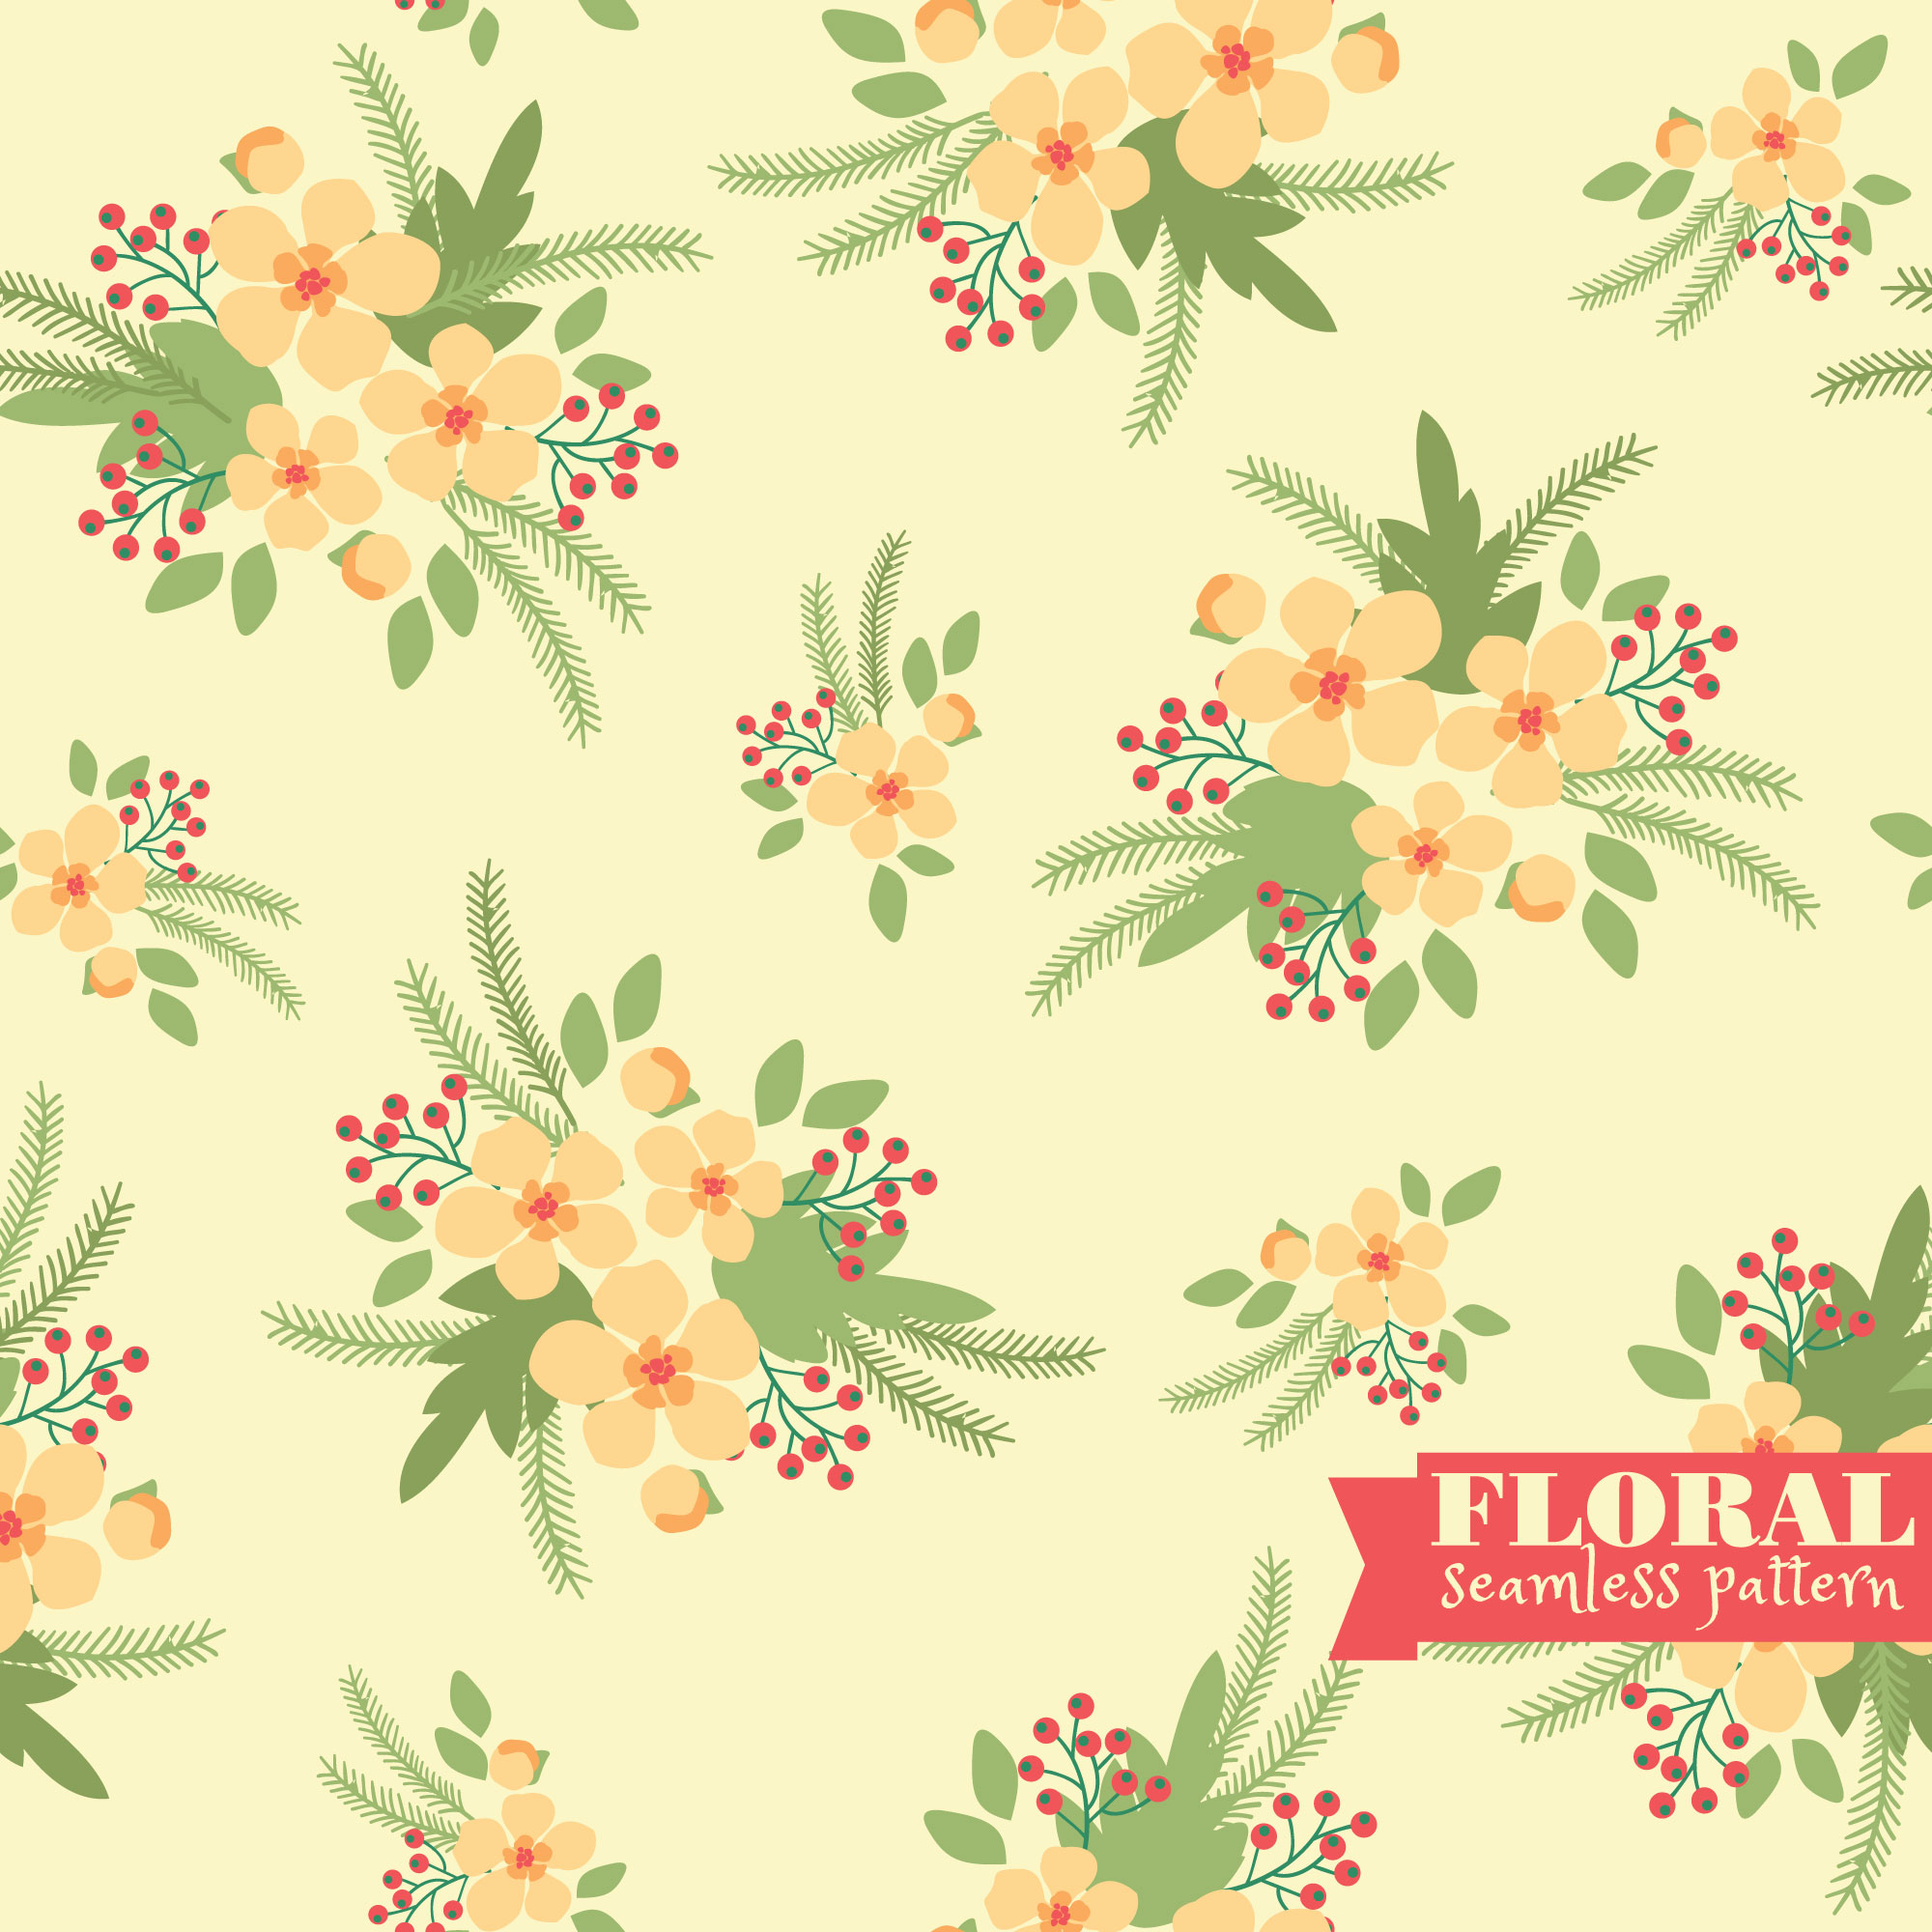 Floral seamless pattern Photoshop brush